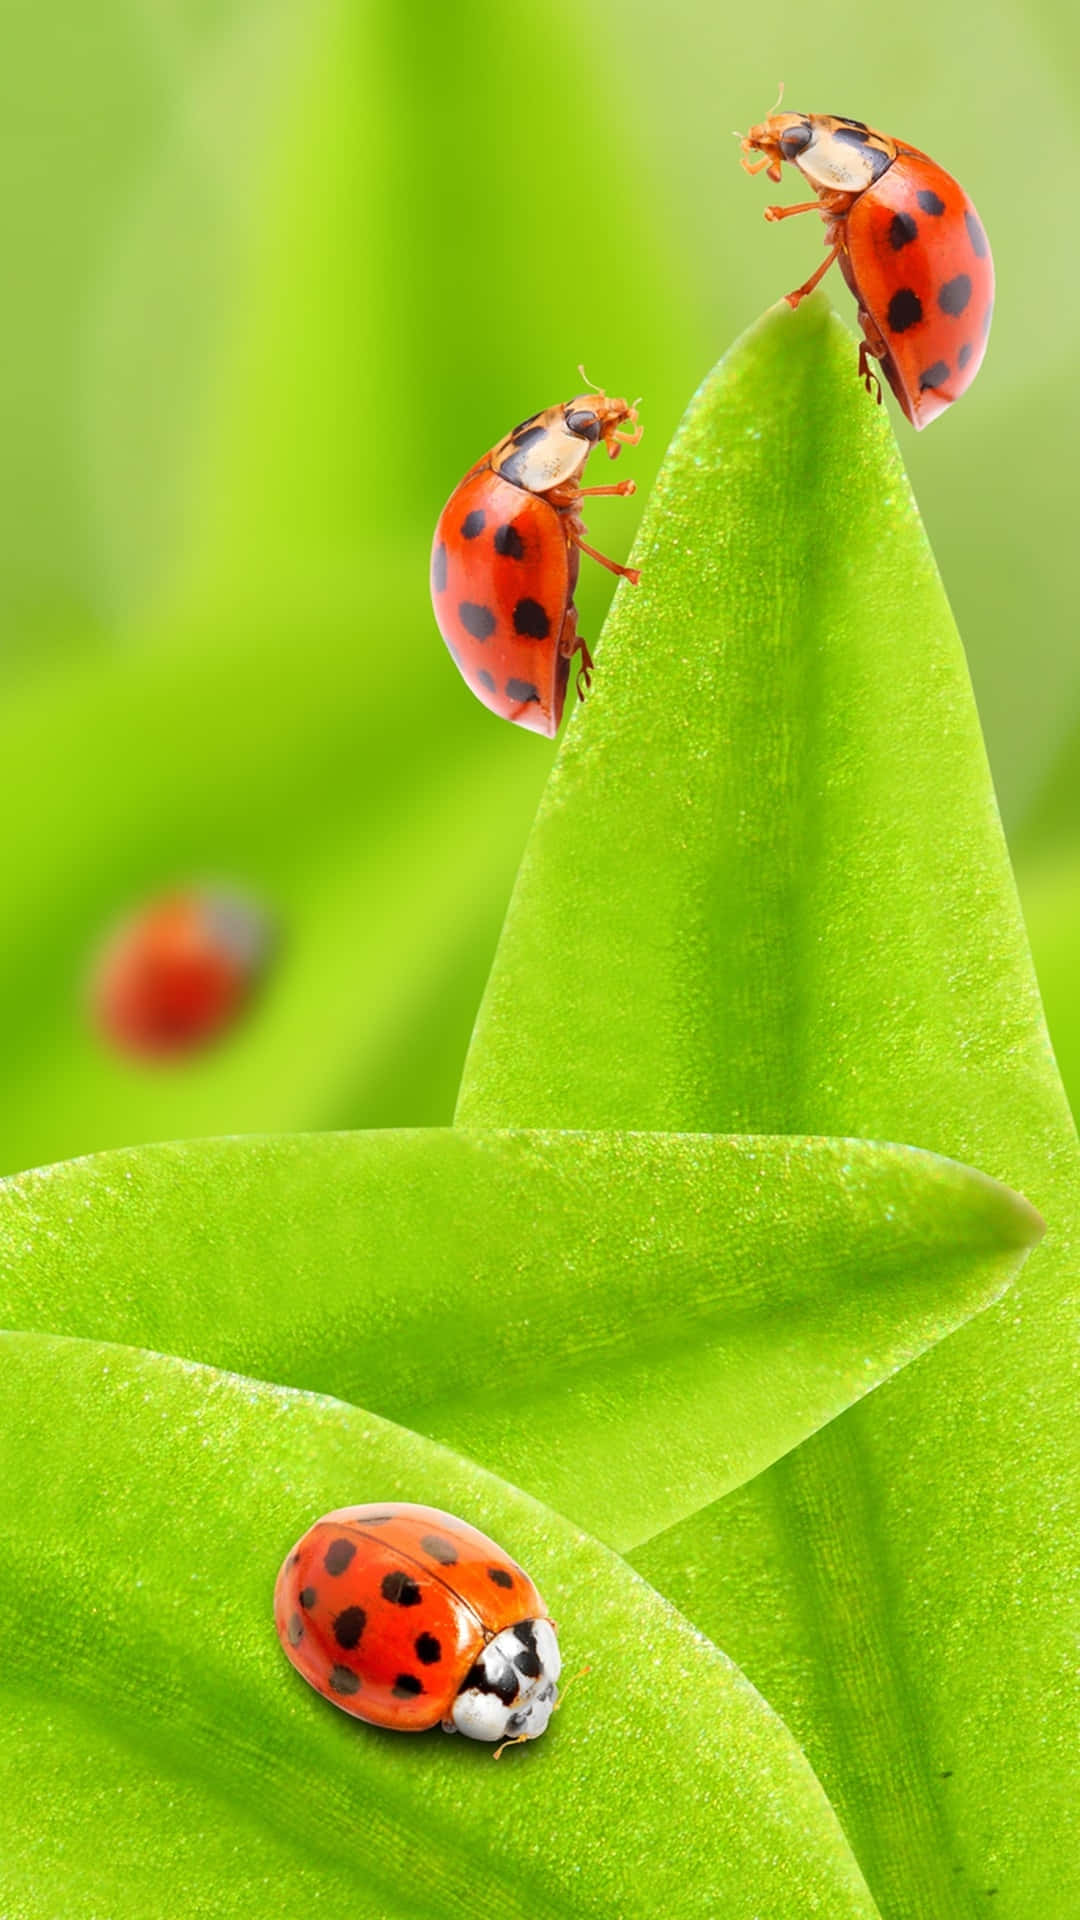 Ladybug Images - Free Download on Freepik